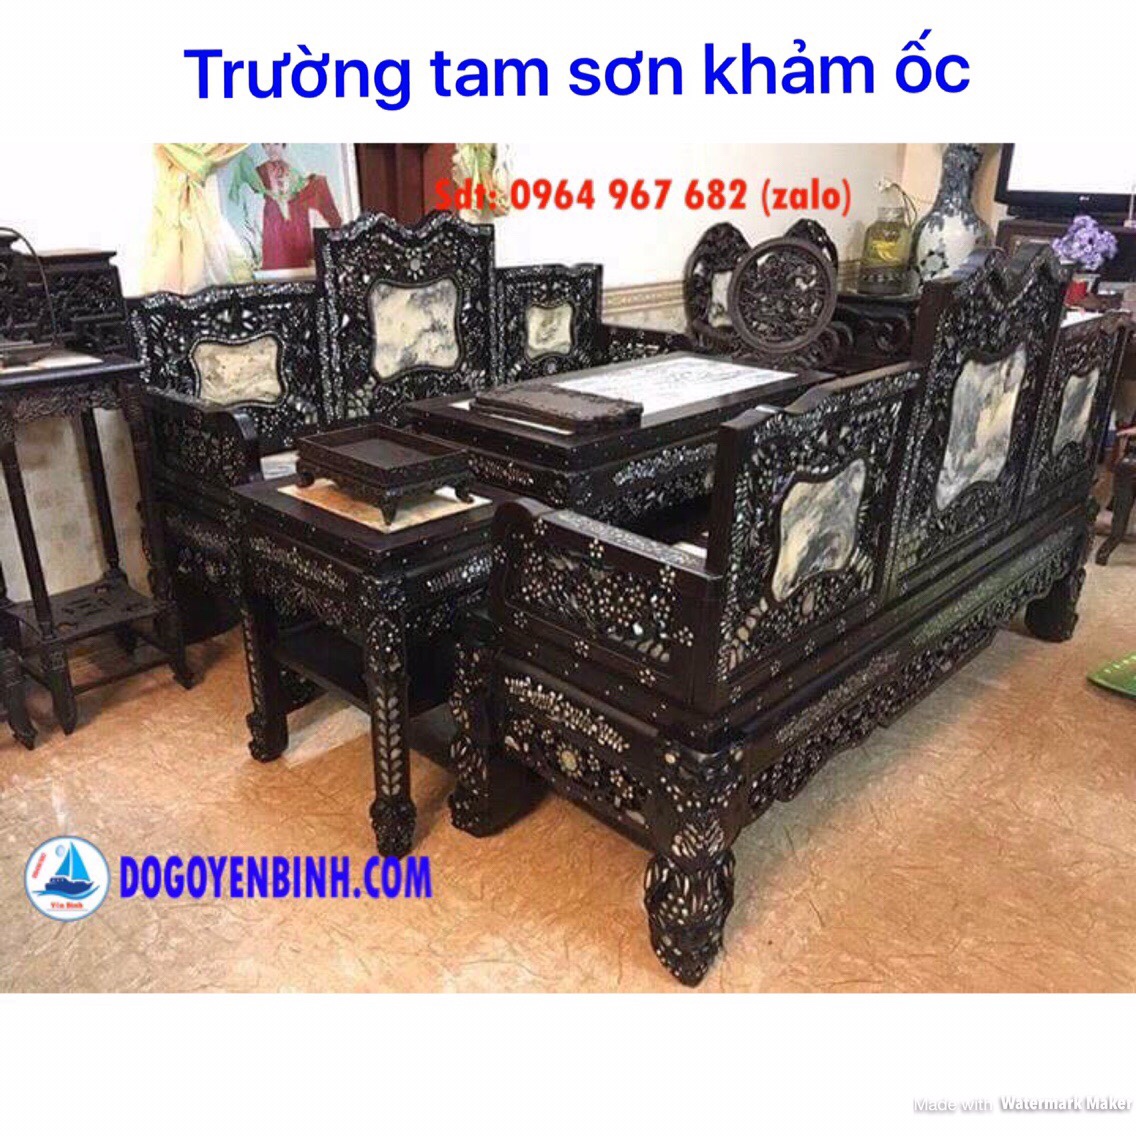 truong-ki-tam-son-kham-oc-1